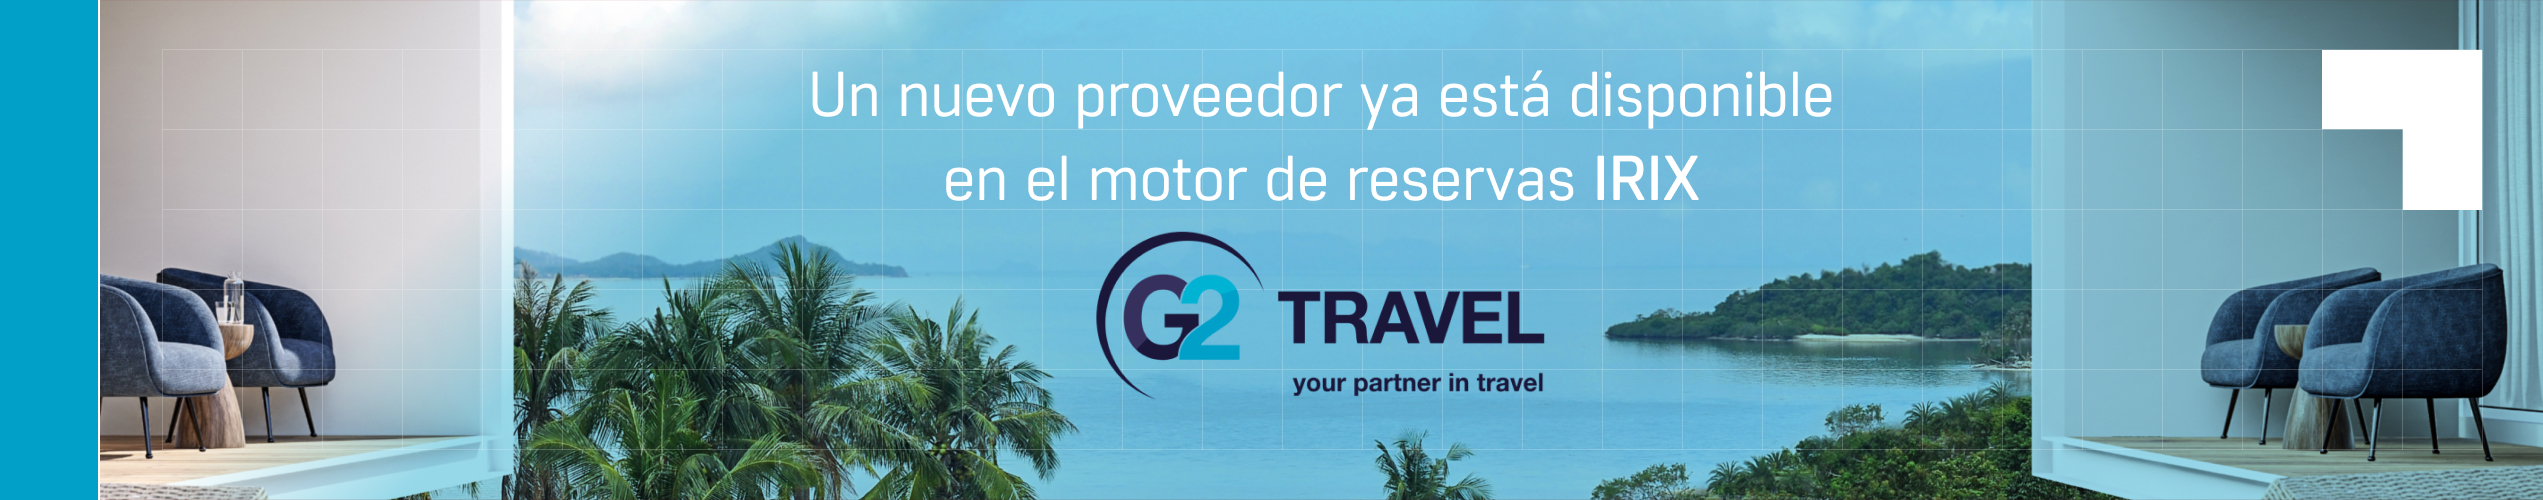 G2 Travel and dcs plus Spanish